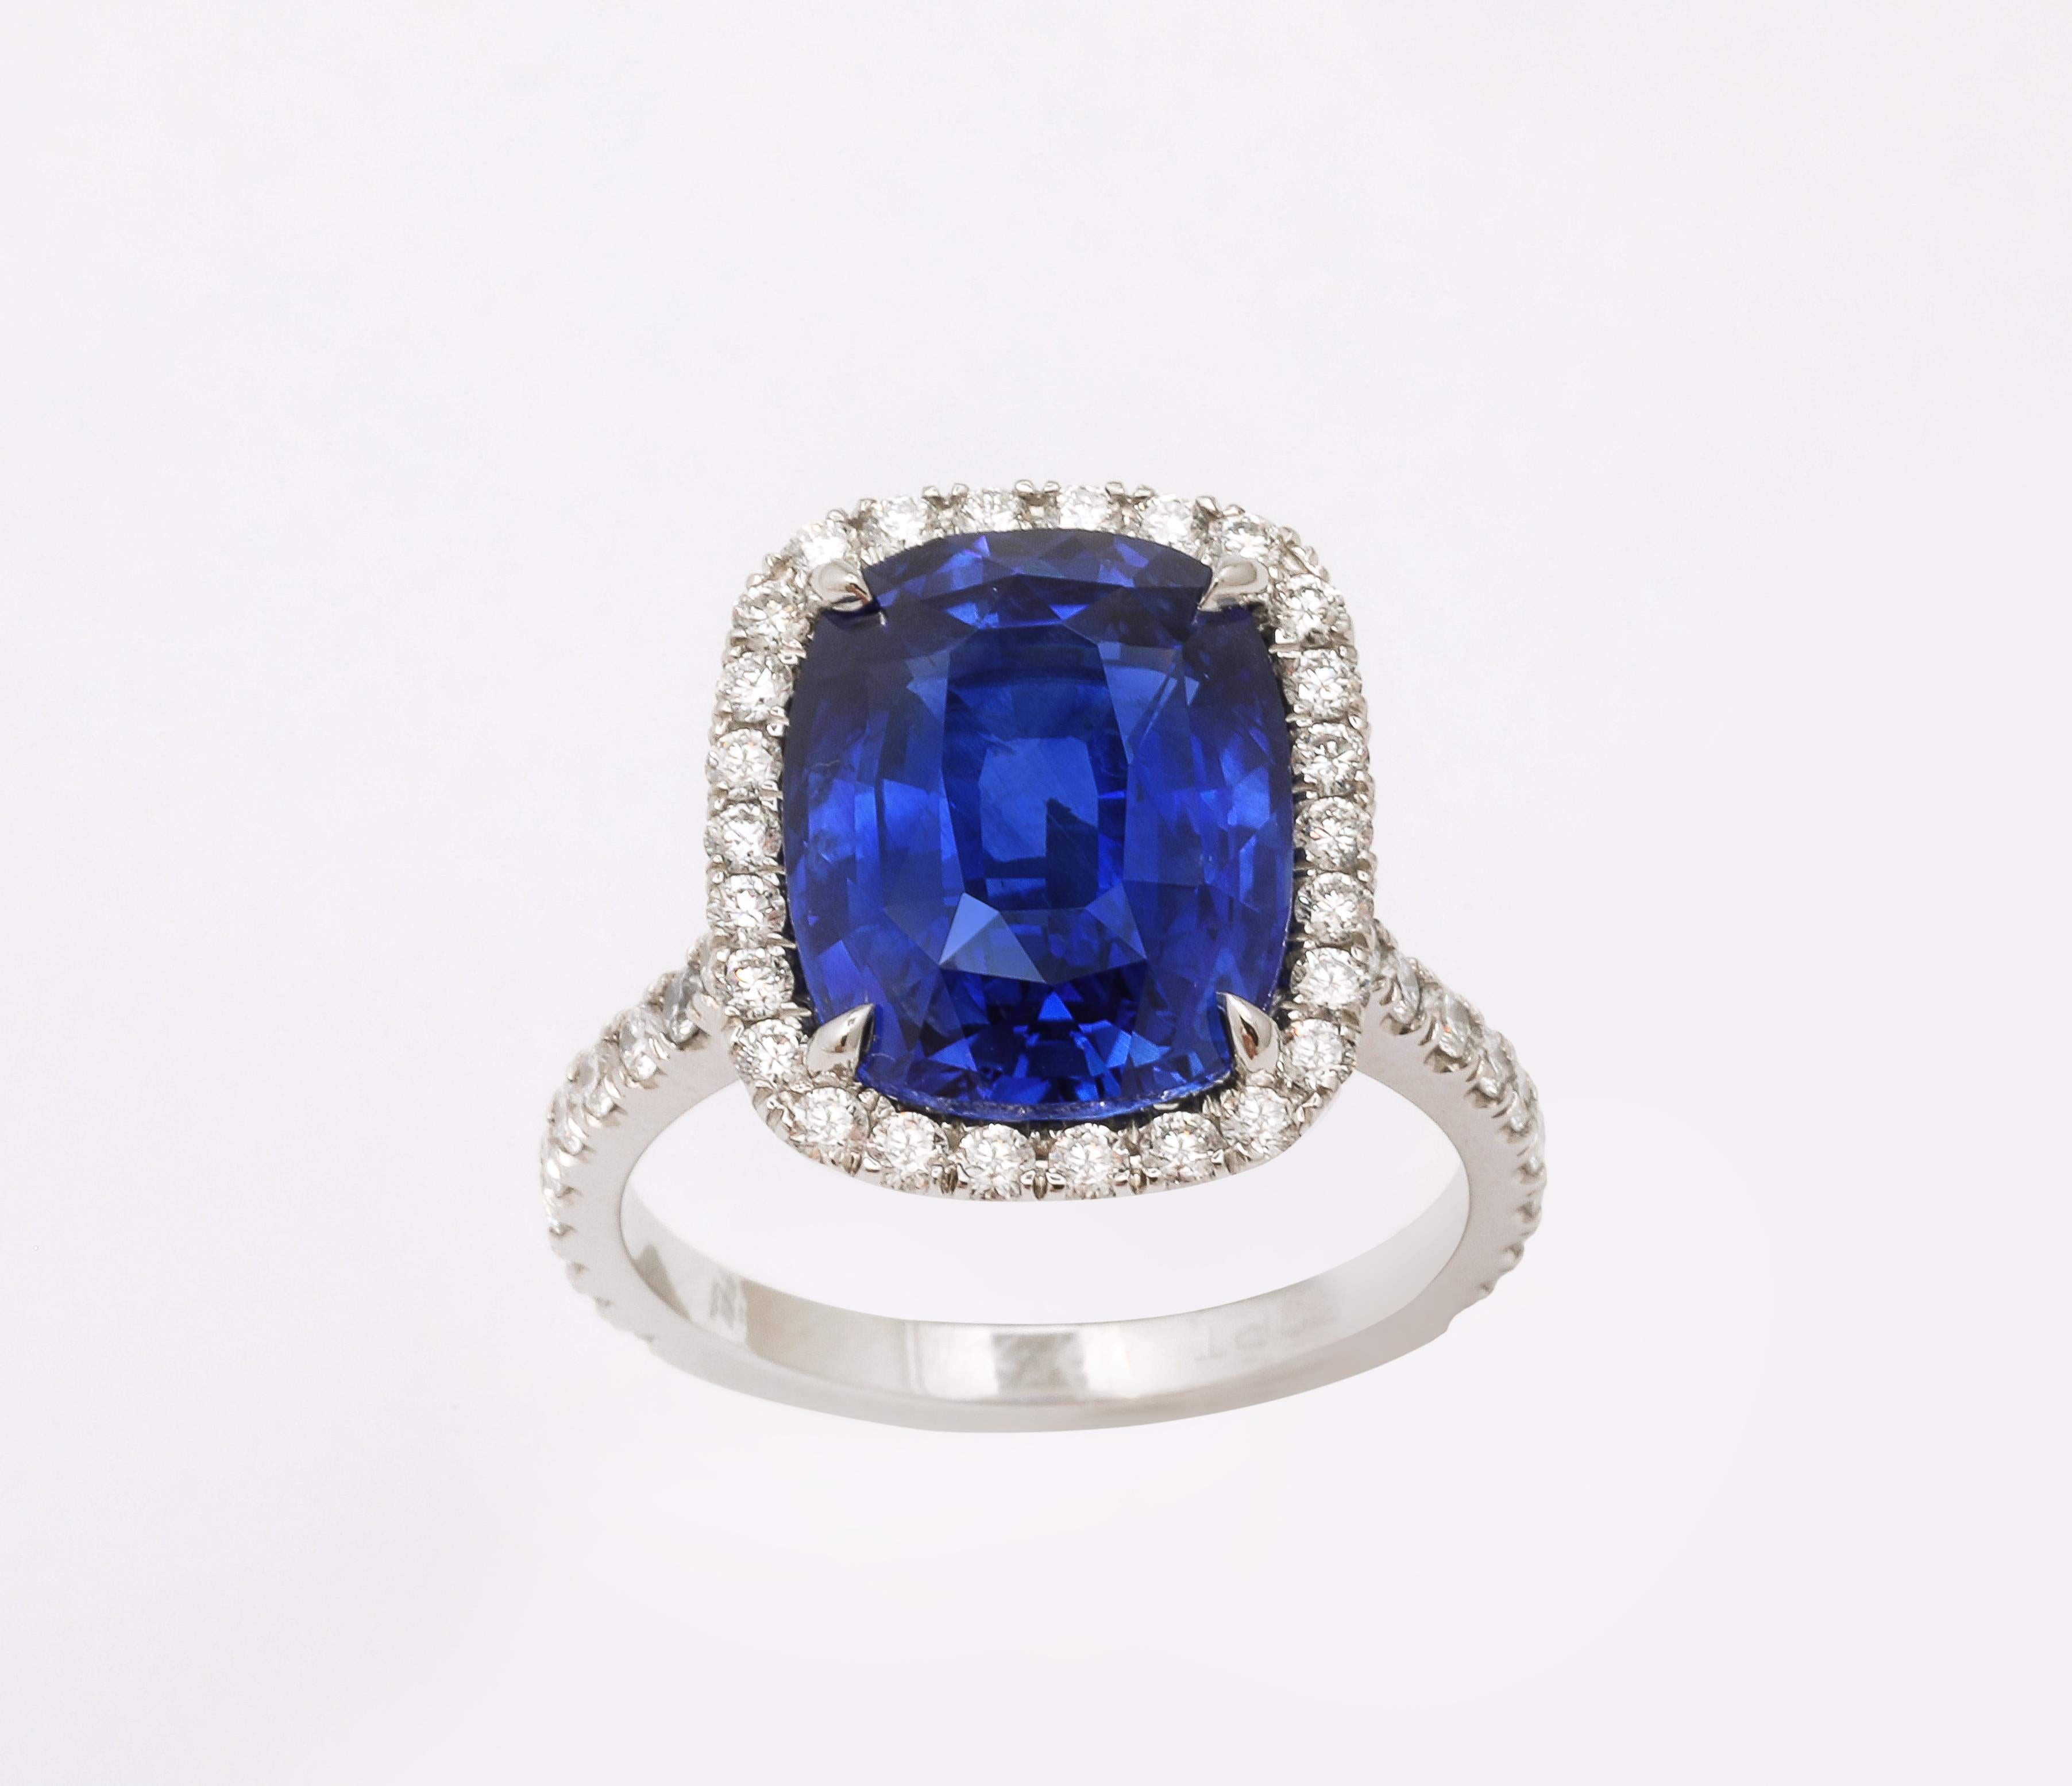 7 carat Vivid Blue Sapphire Ring For Sale 4